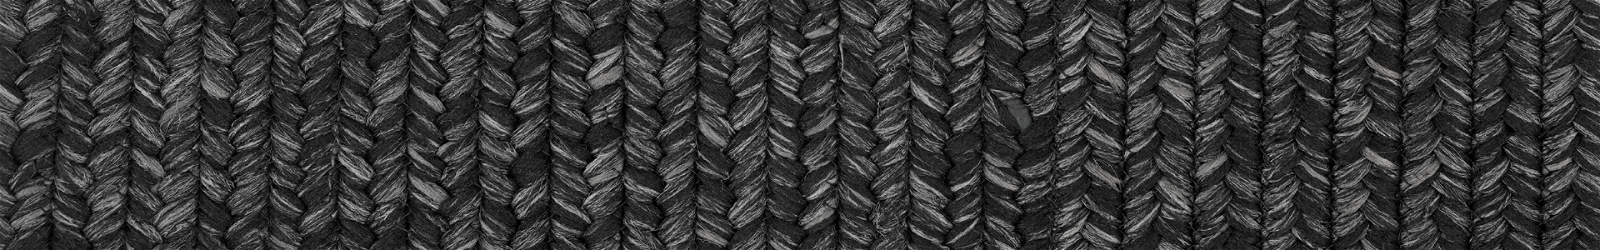 5x8' - Black Braided Rugs